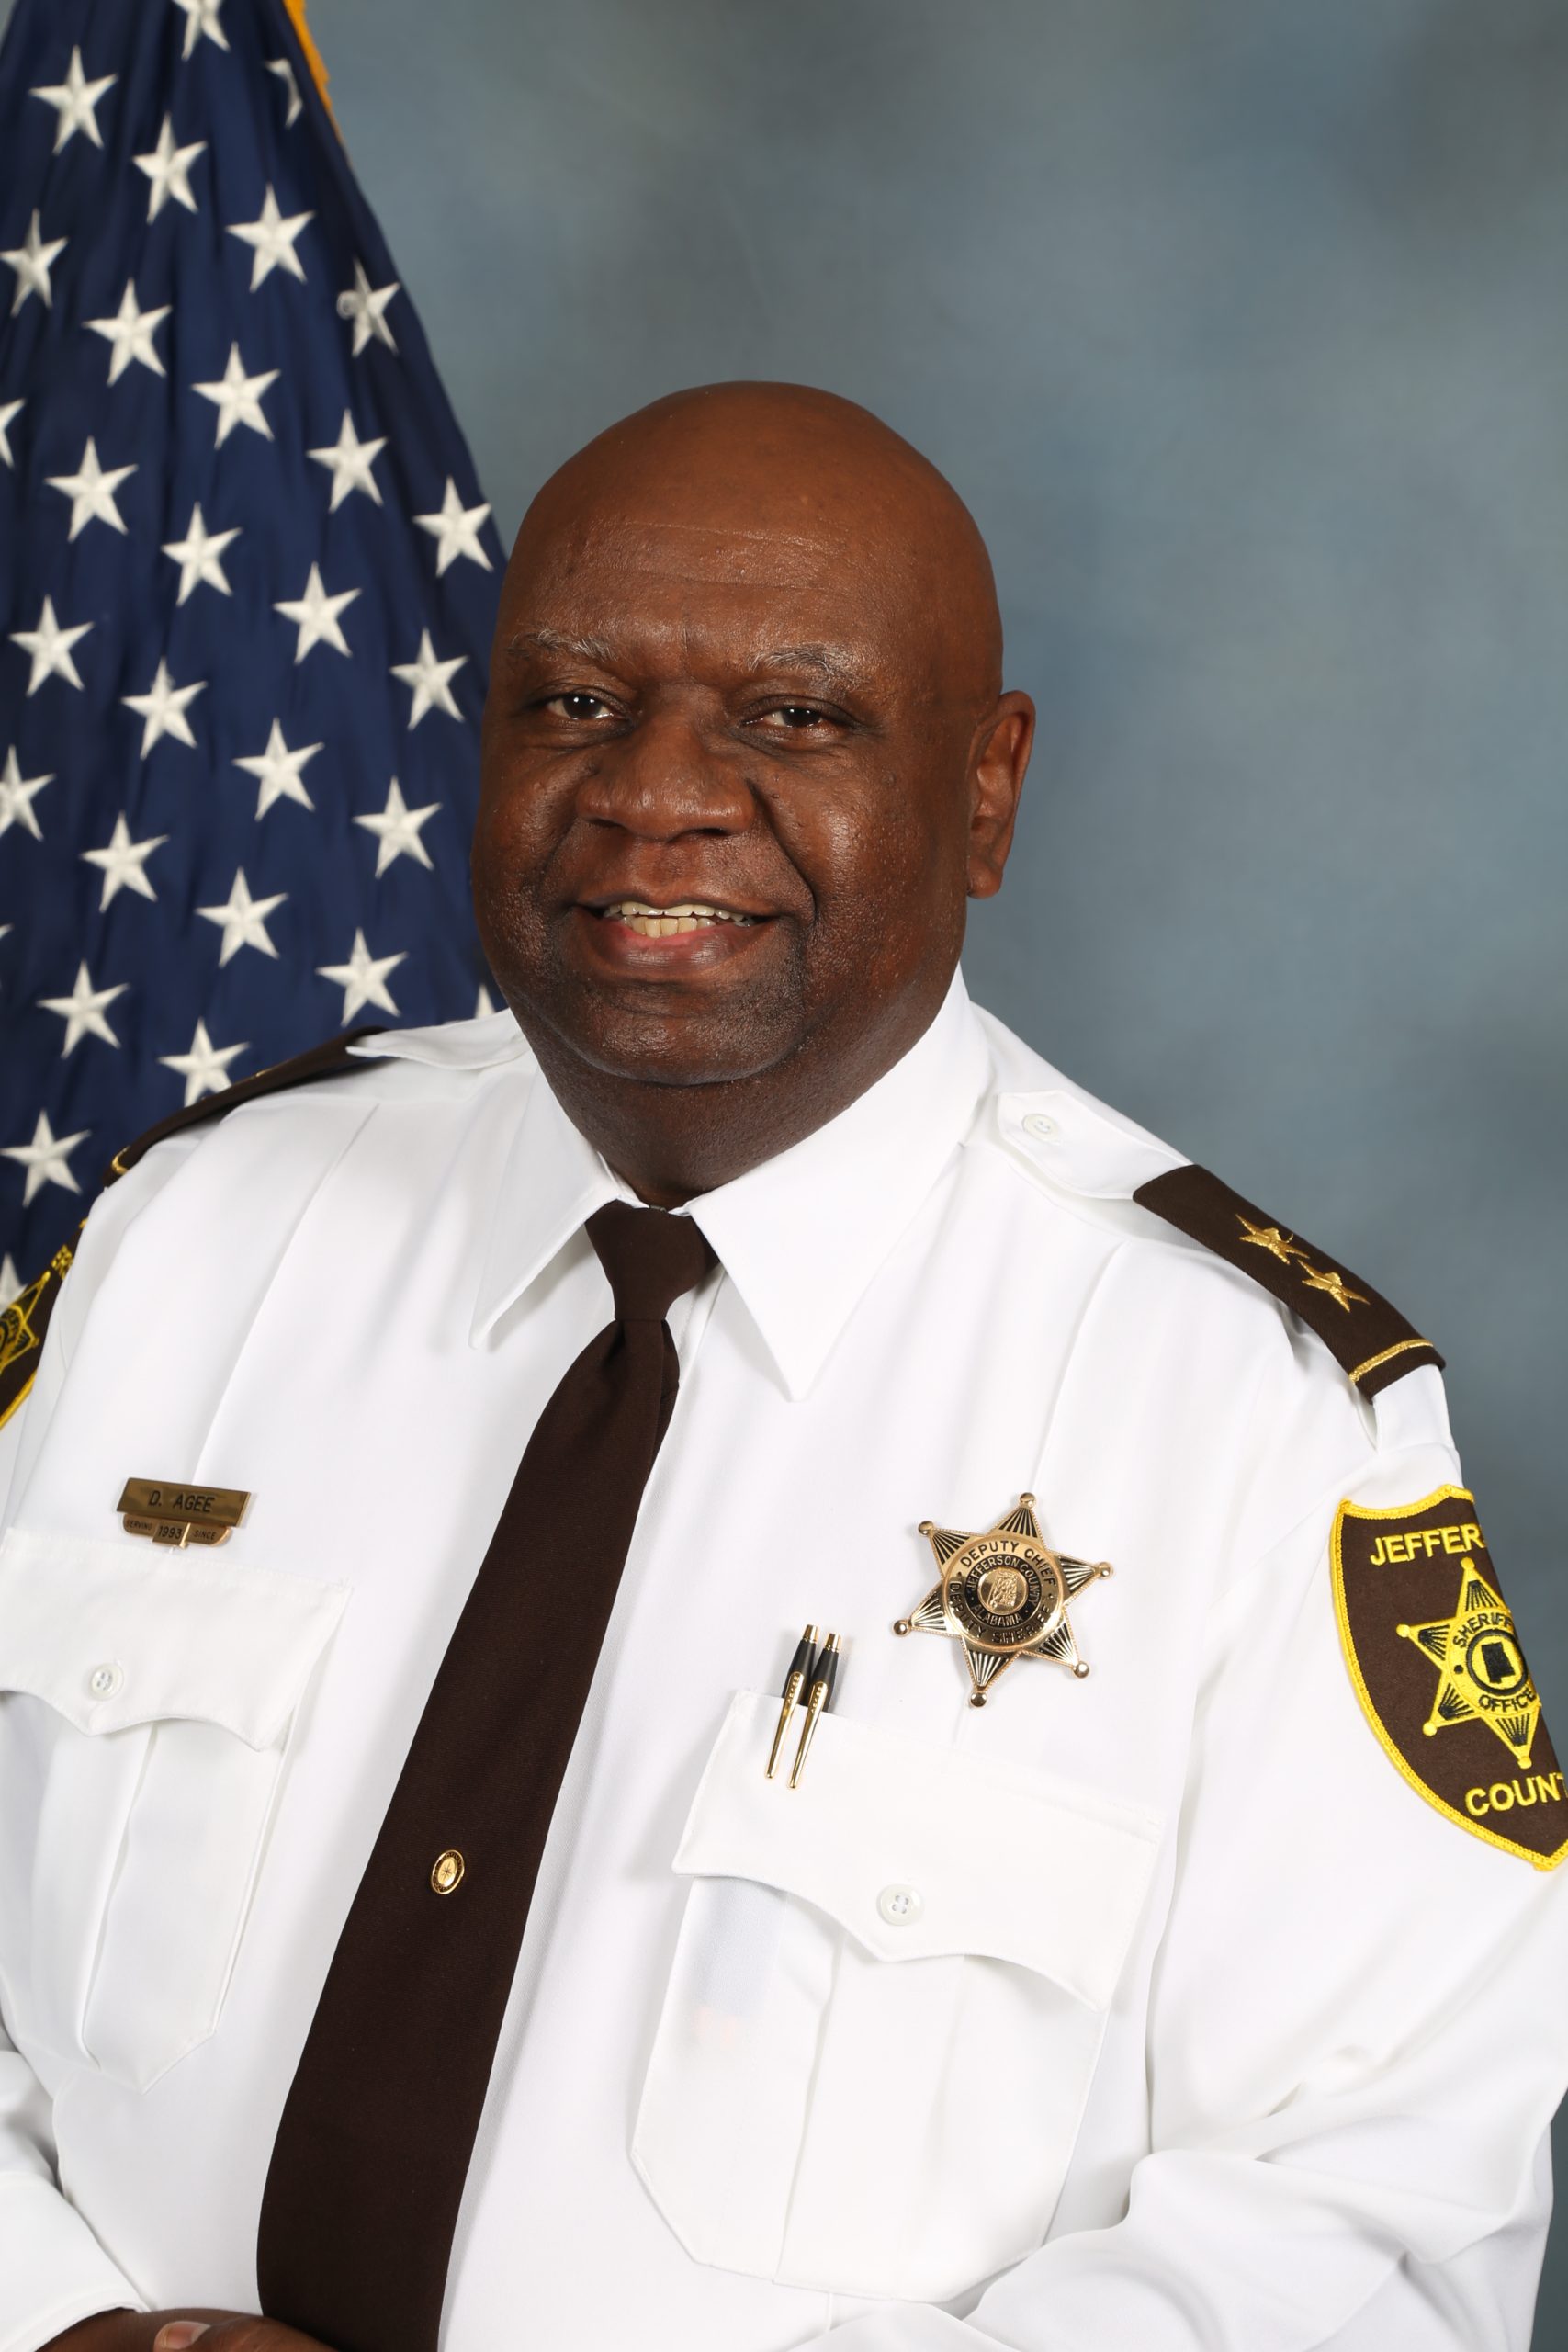 Command-Staff-Jefferson-County-Sheriff-Department-Deputy-Chief-David-Agee